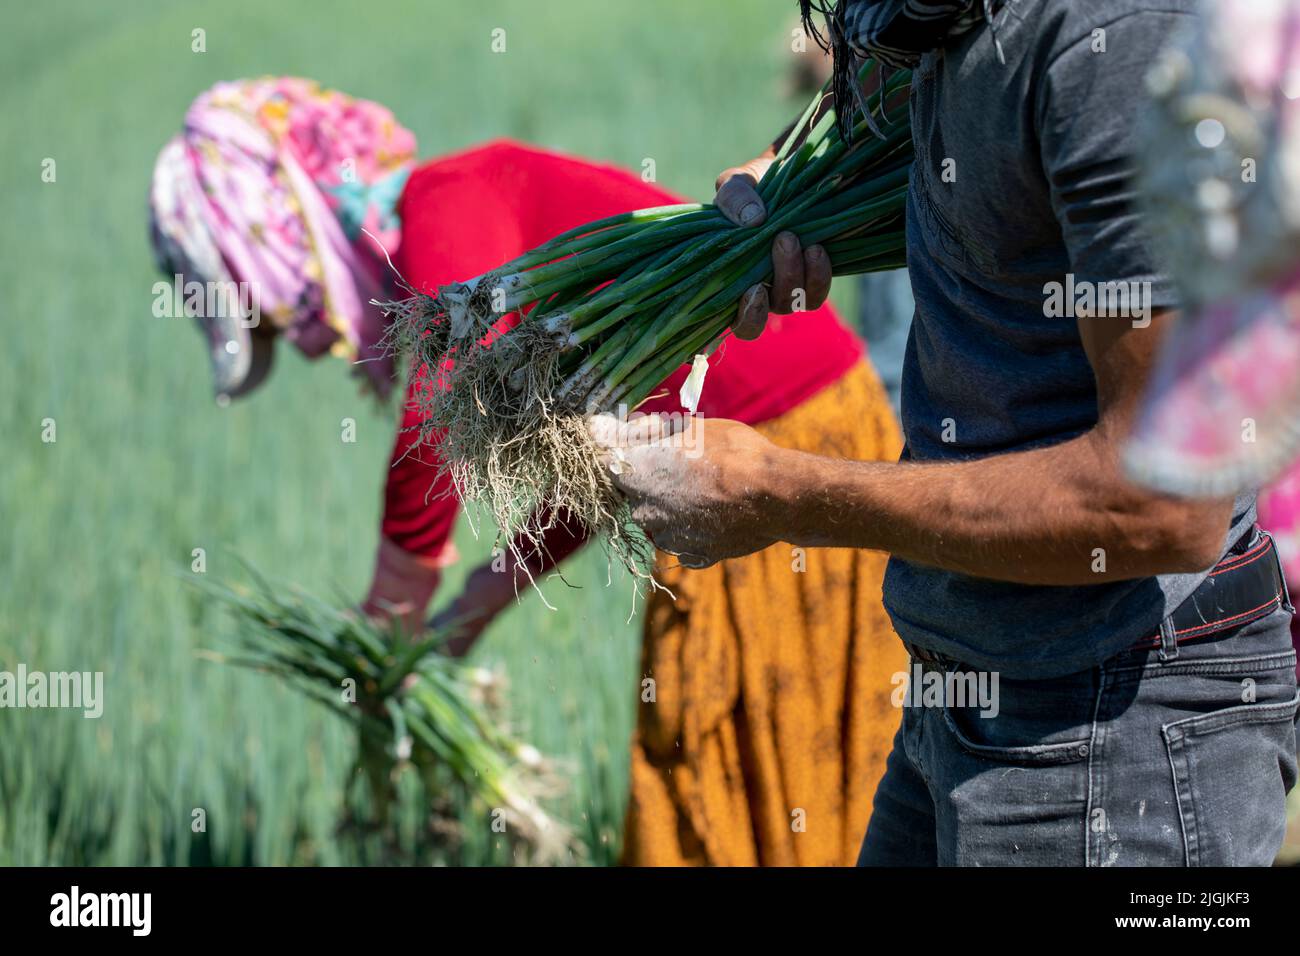 working on scallion plantation, harvesting organic vegetables Stock Photo